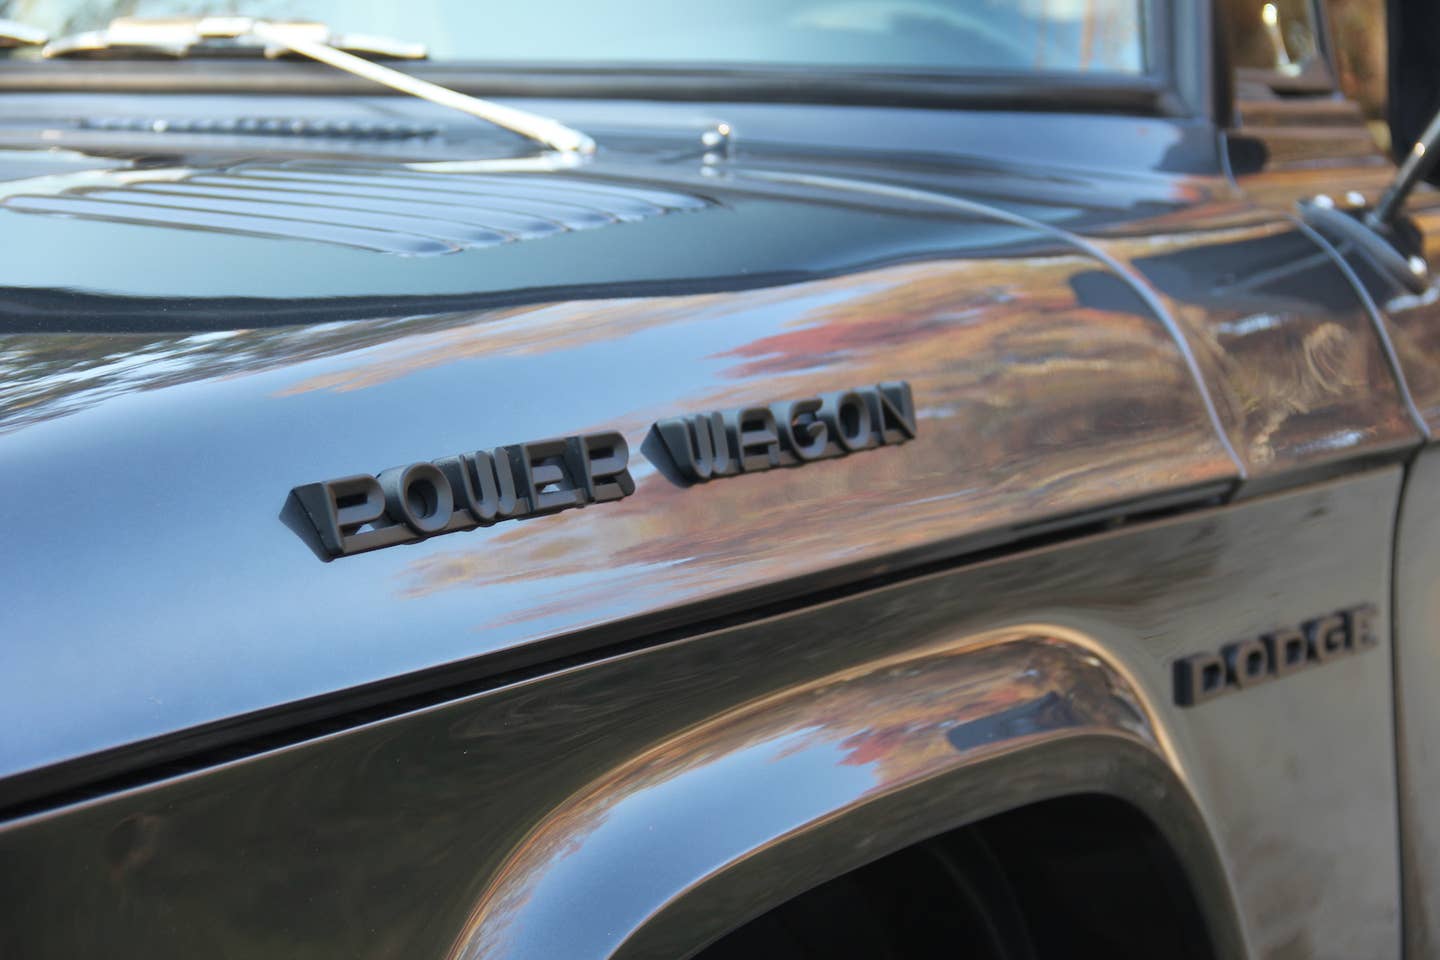 69-dodge-power-wagon-2015-conversion-27.jpg